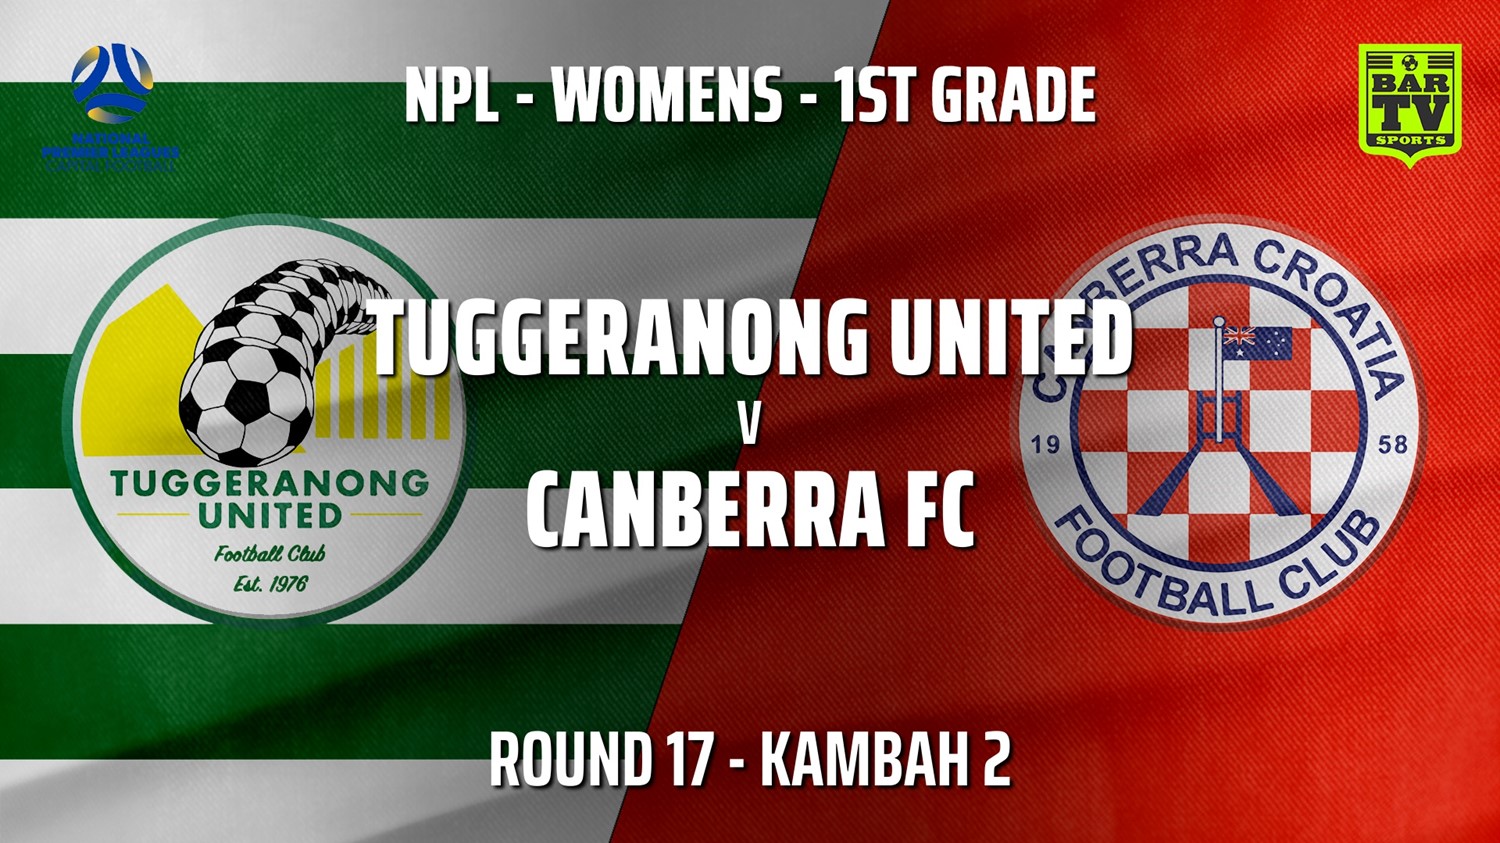 210808-Capital Womens Round 17 - Tuggeranong United FC (women) v Canberra FC (women) Slate Image